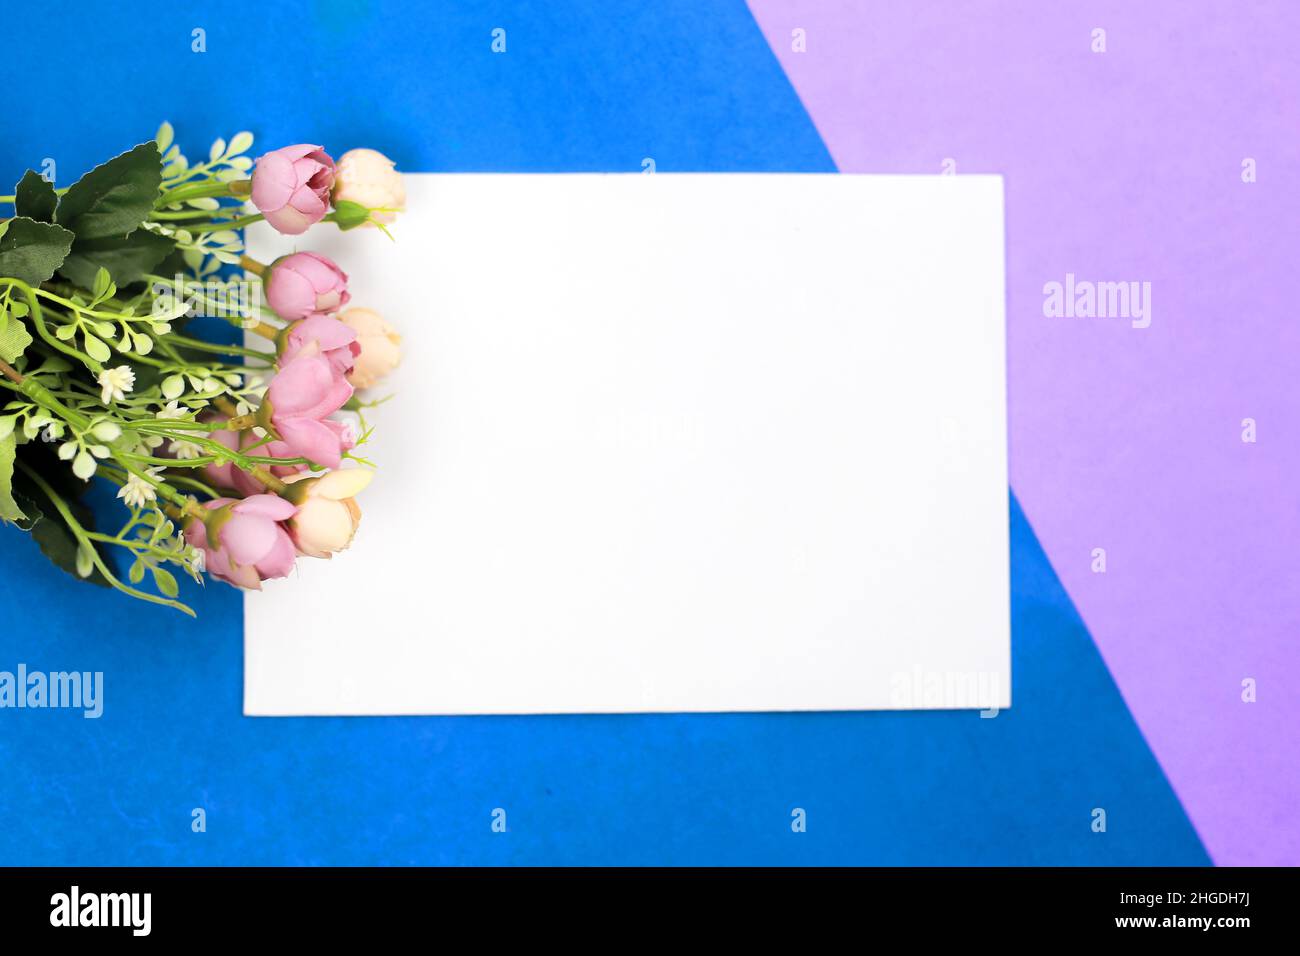 Invitation card mockup, blank greeting card template. Average, minimalist style Stock Photo